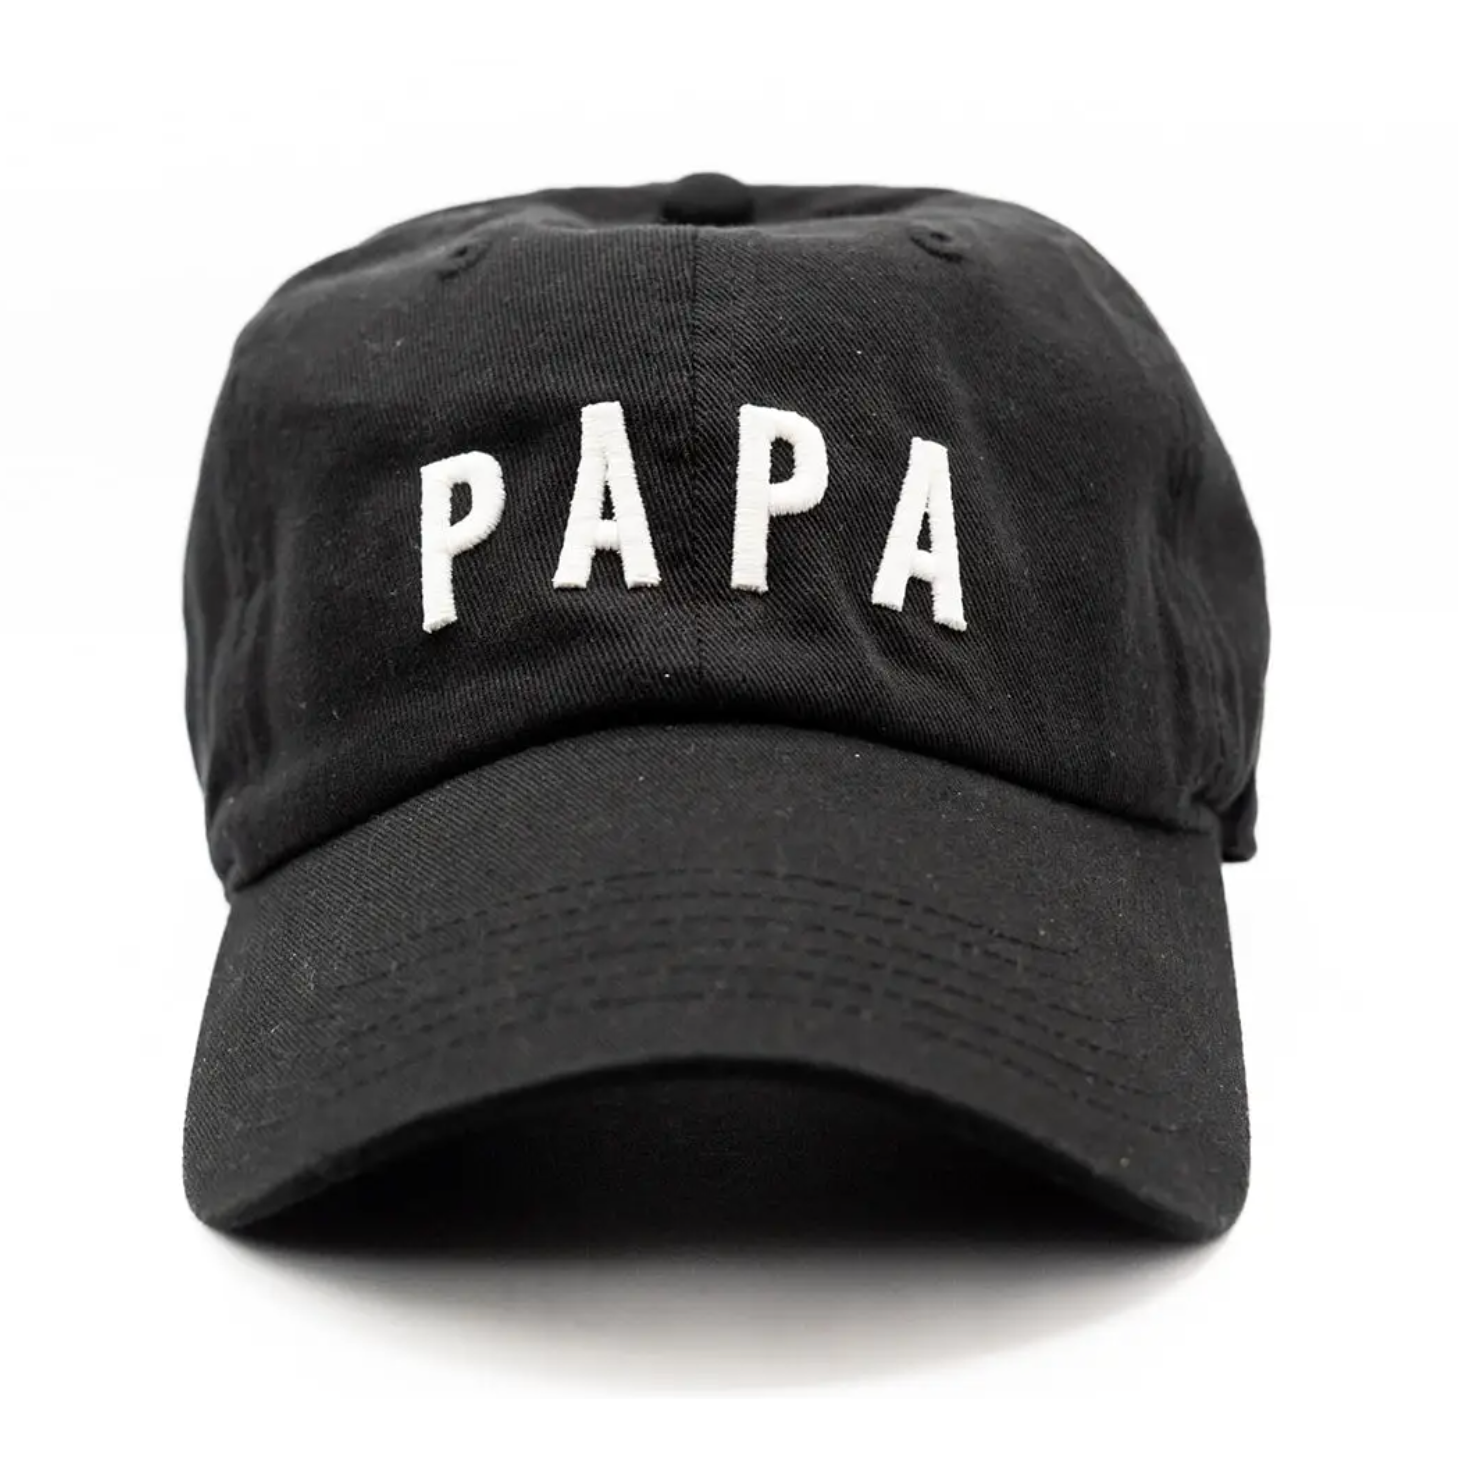 papa hat in black